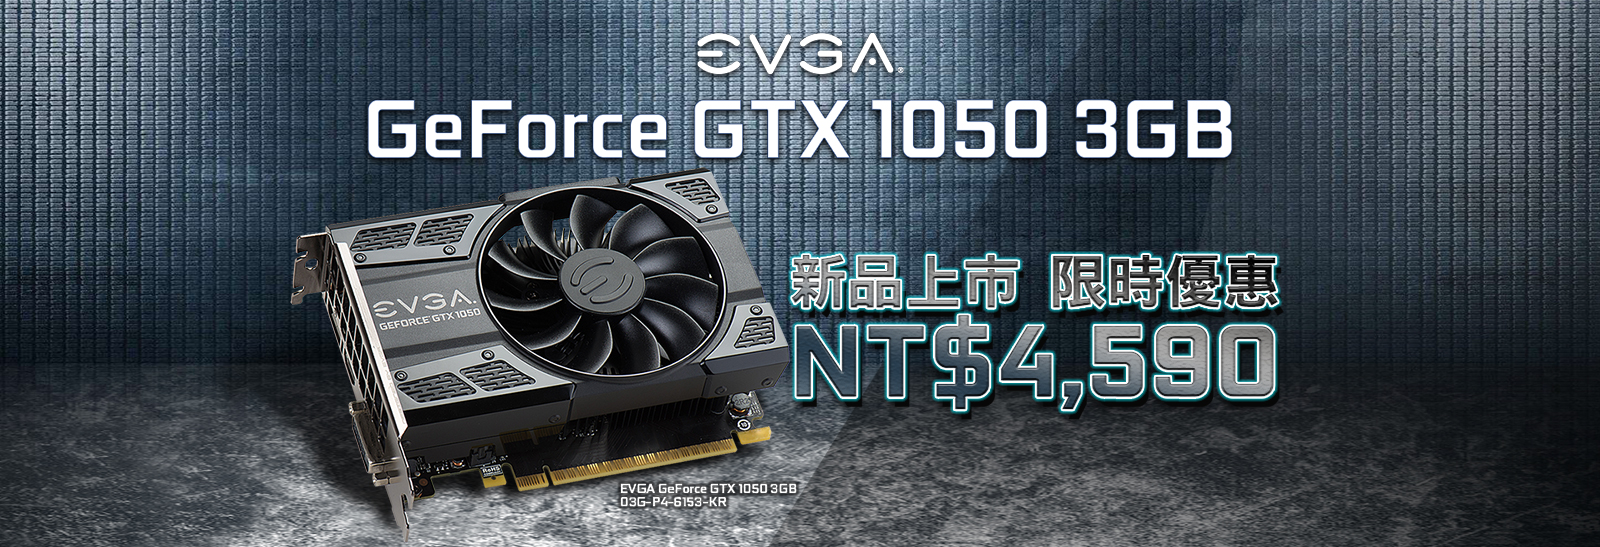 EVGA GeForce GTX 1050 3GB 新品上市 限時優惠